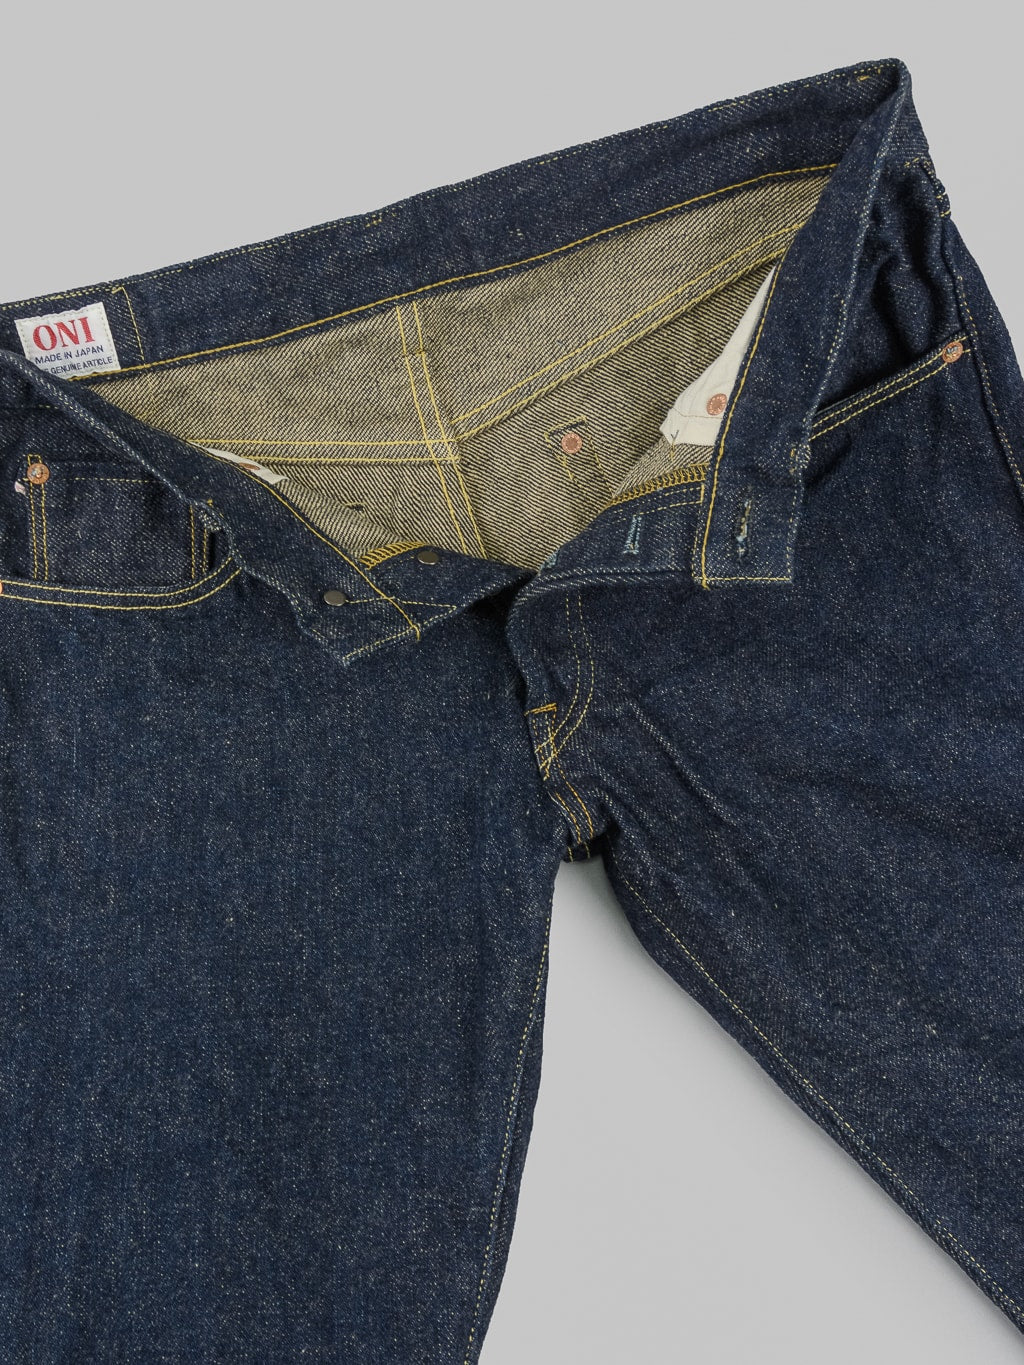 ONI Denim 544ZR Secret Denim Stylish Tapered Jeans interior fabric detail